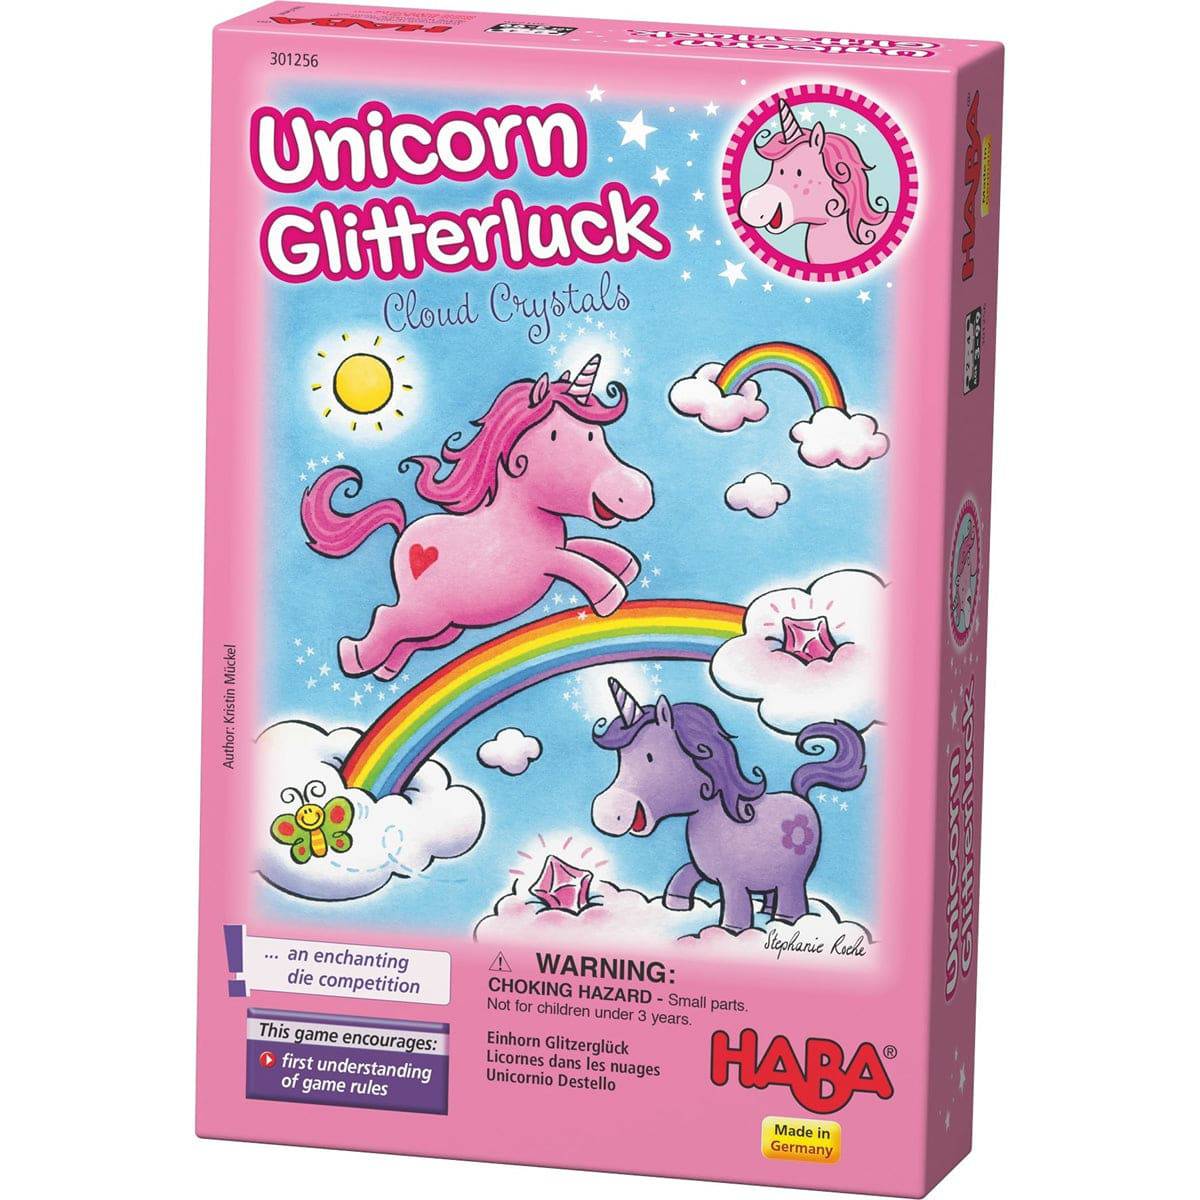 Unicorn Glitterluck - Cloud Crystals Game - HABA USA